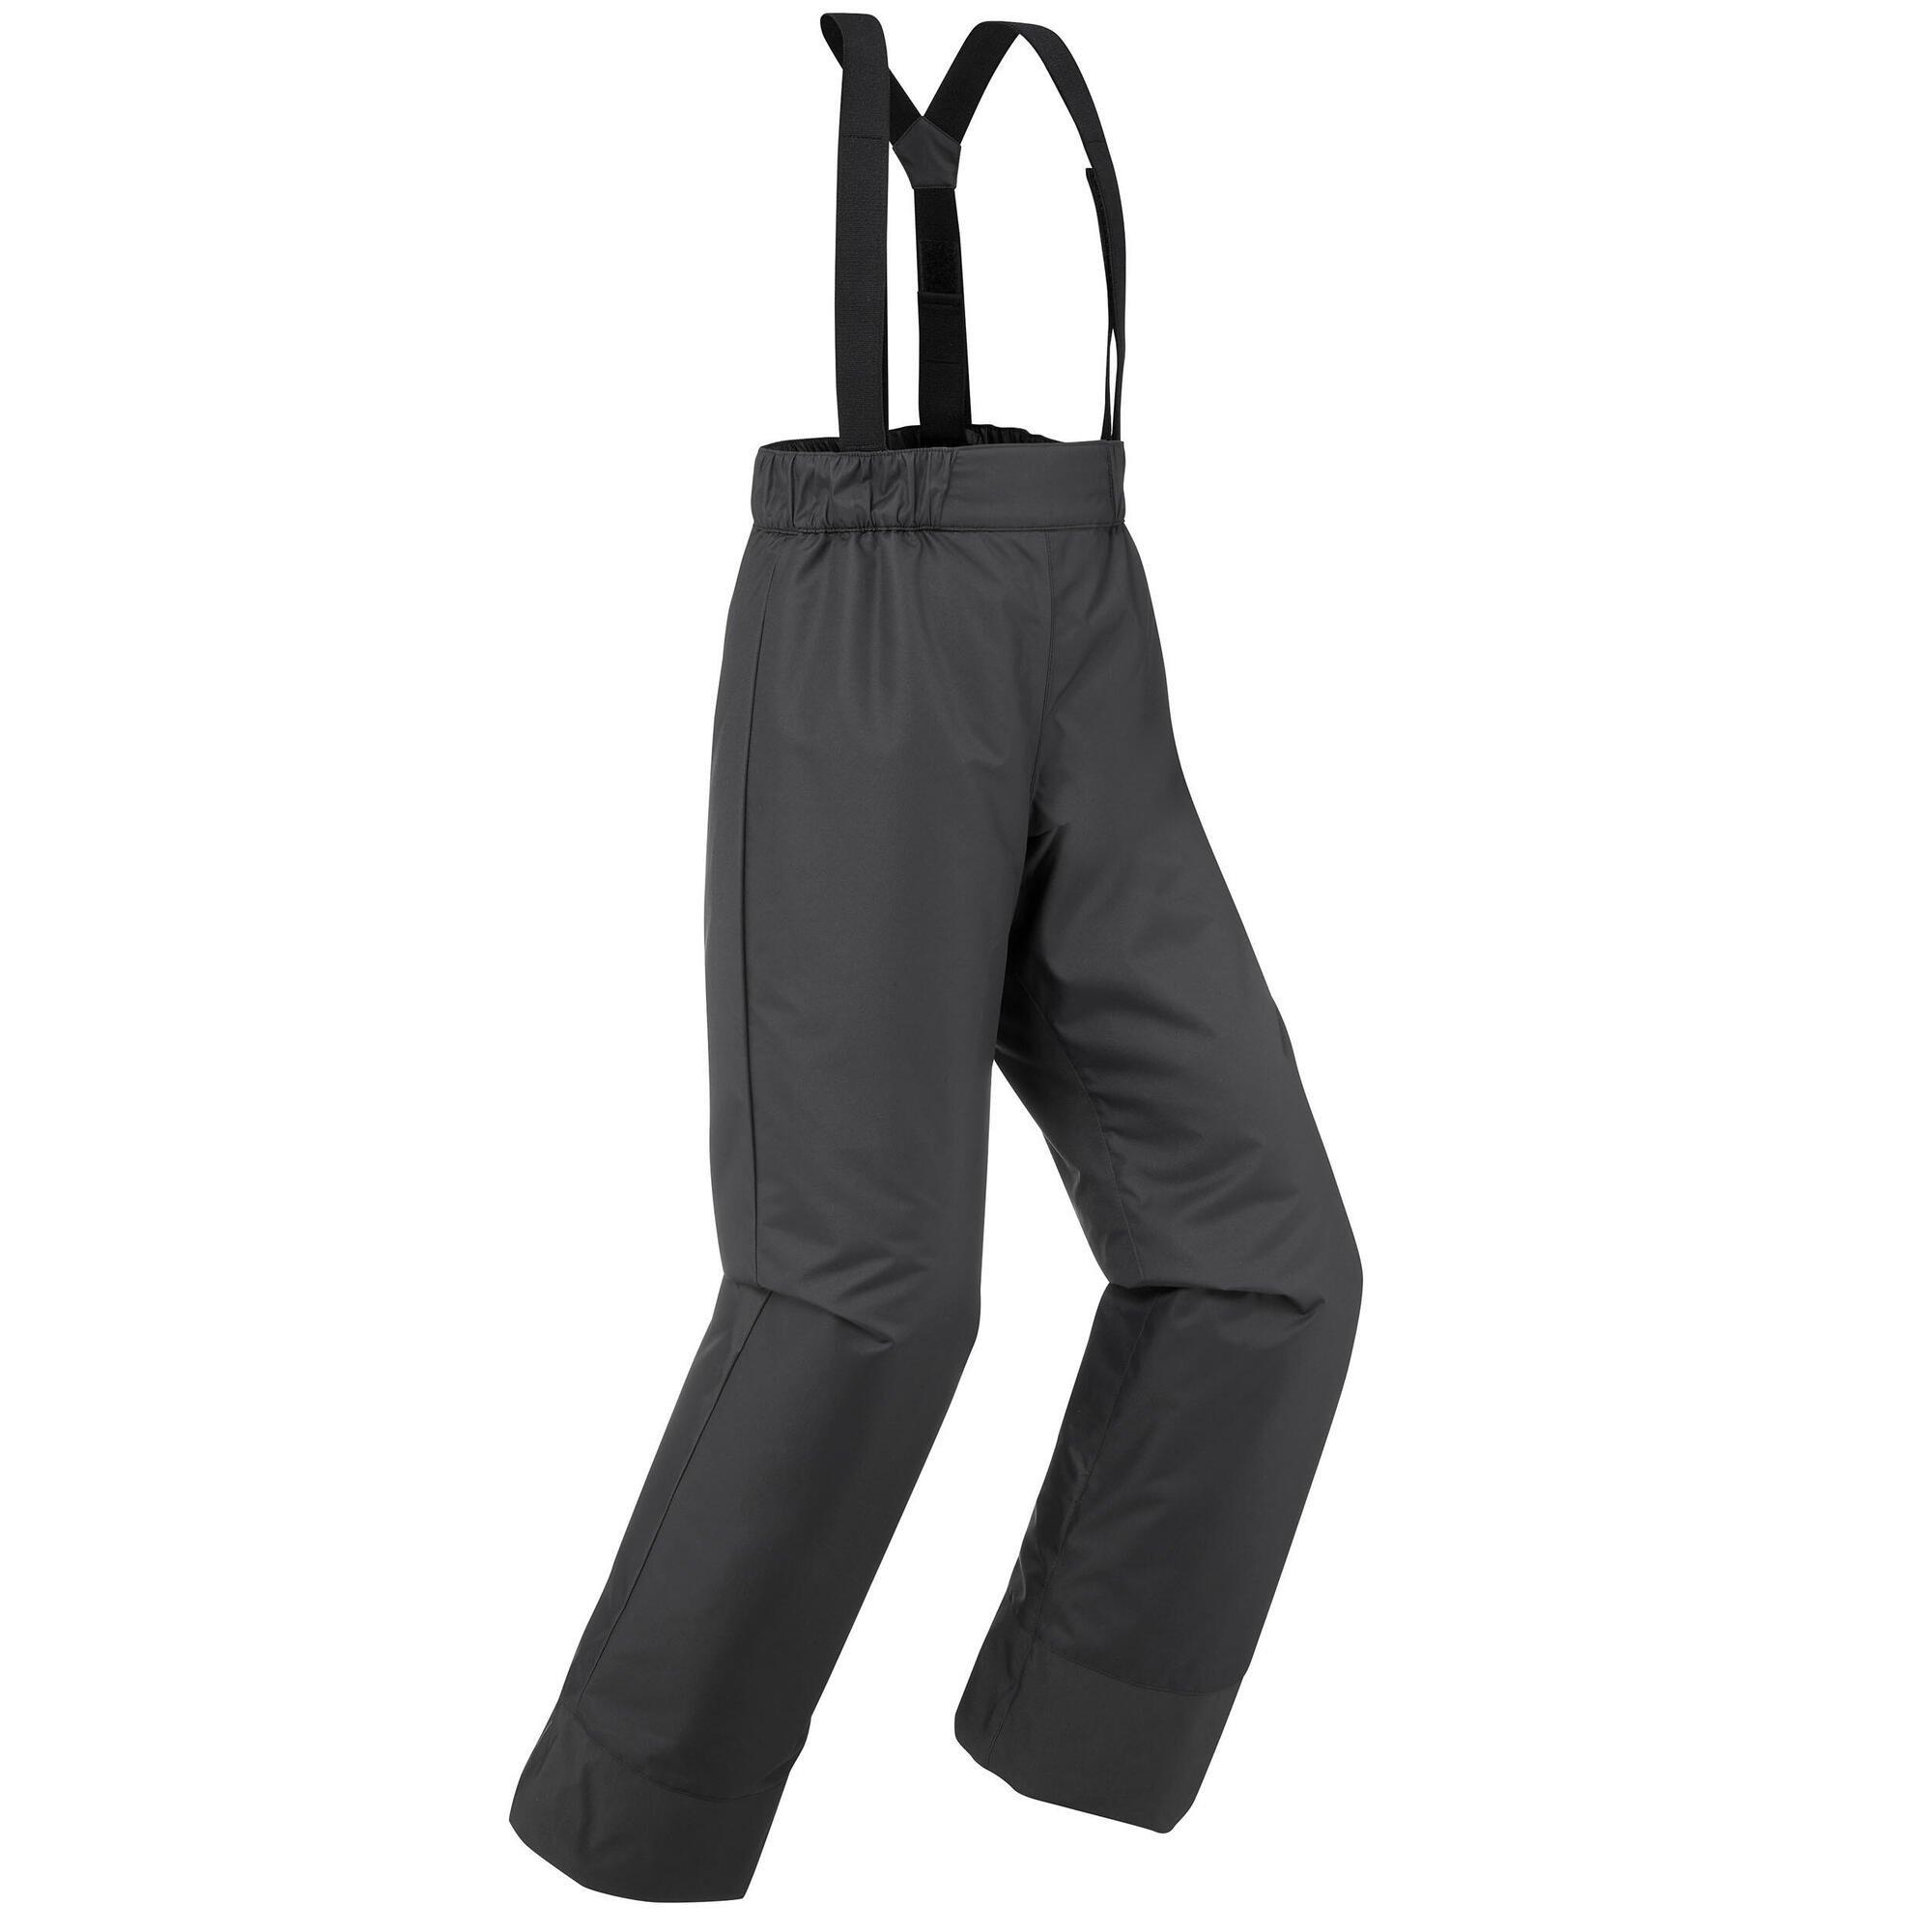 Decathlon Kids’ Warm And Waterproof Ski Trousers 100